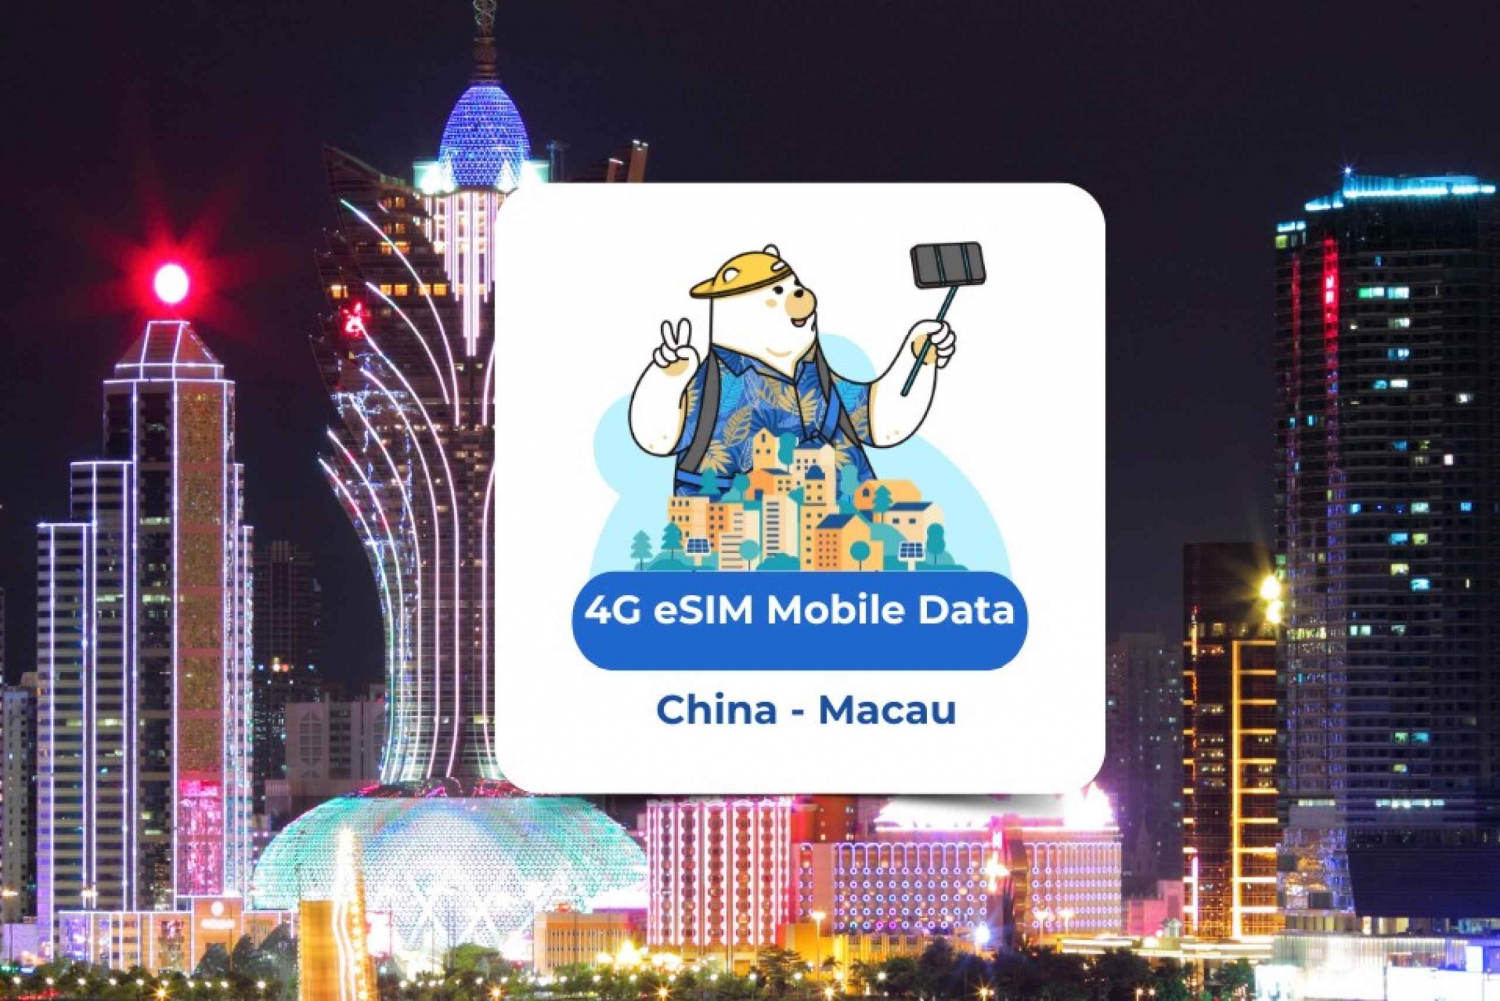 China - Macau : eSIM Mobile Data